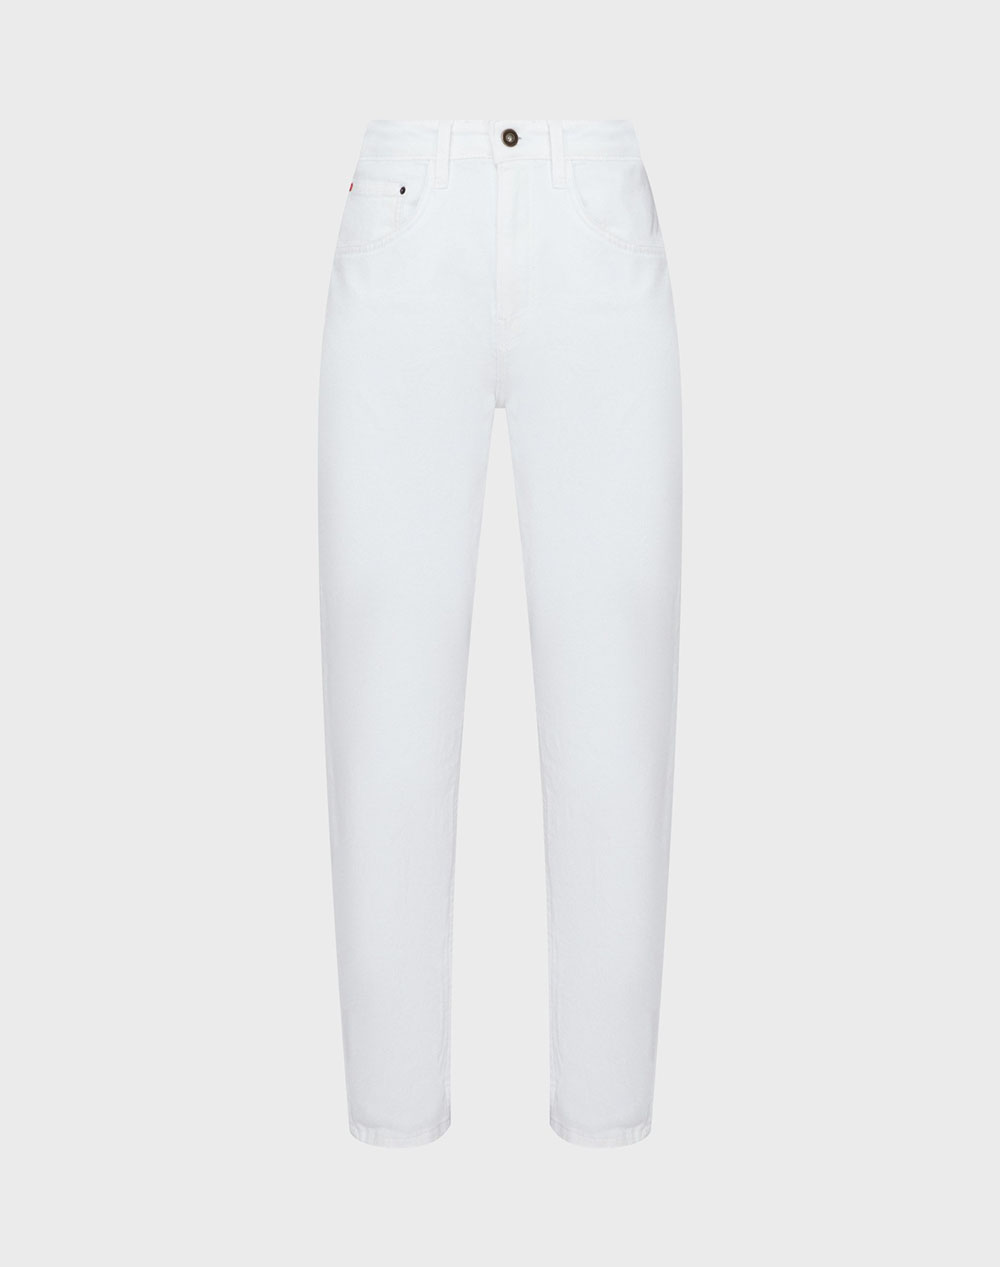 MEXX XANTHE High waist/ Mom jeans MF006201141W-50062 OffWhite 3810PMEXX2010042_XR28244